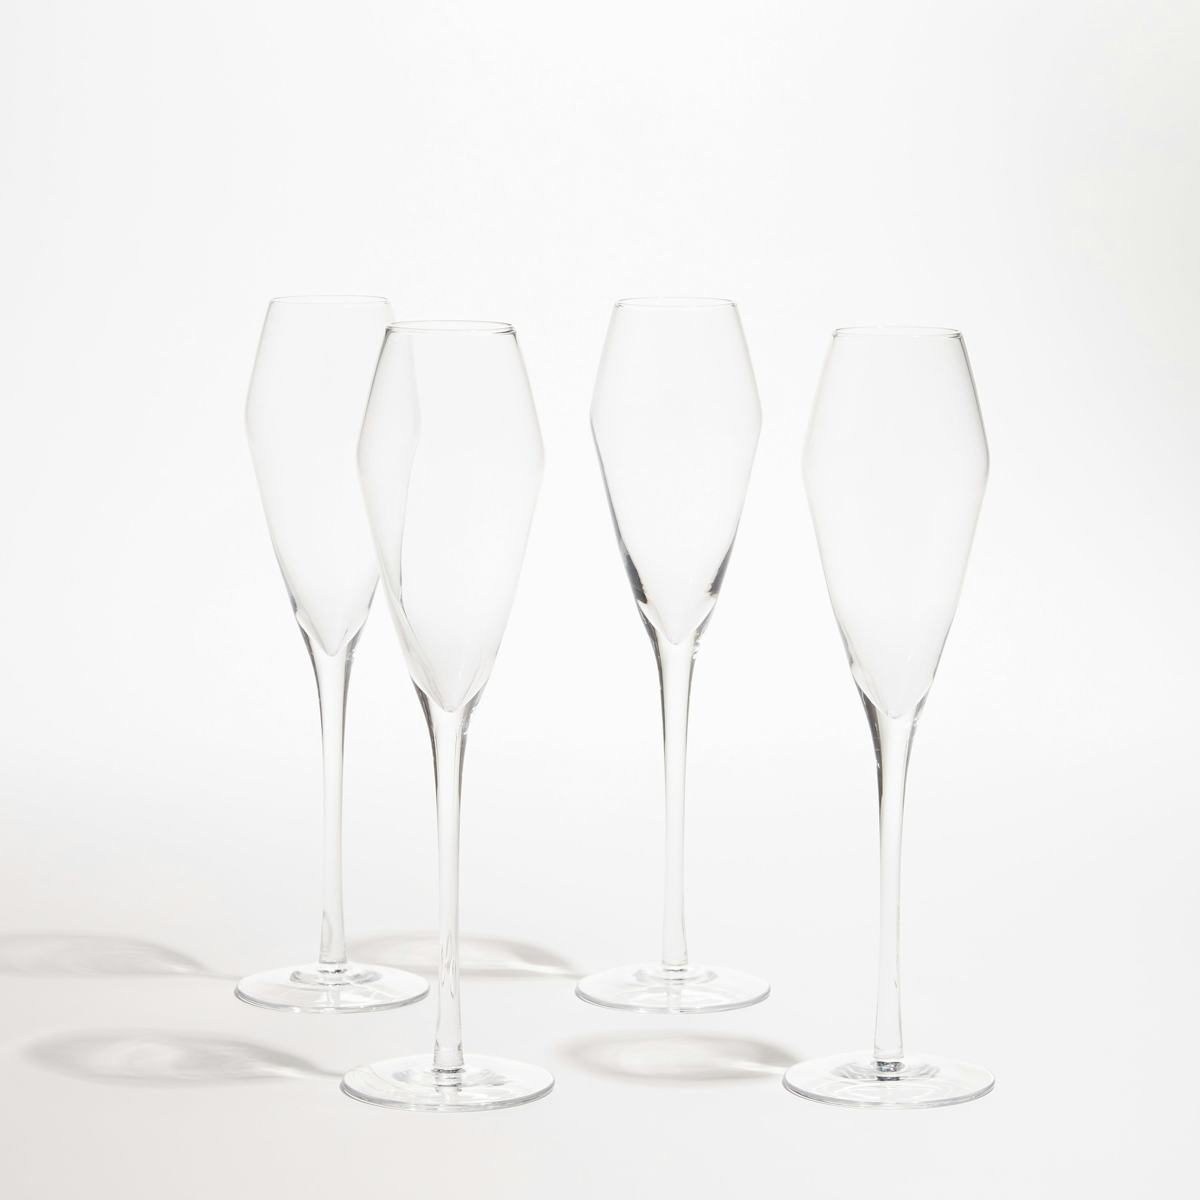 ChampagneGlassesSetOf4_Clear_Home_StillLife_1x1_0067.jpg